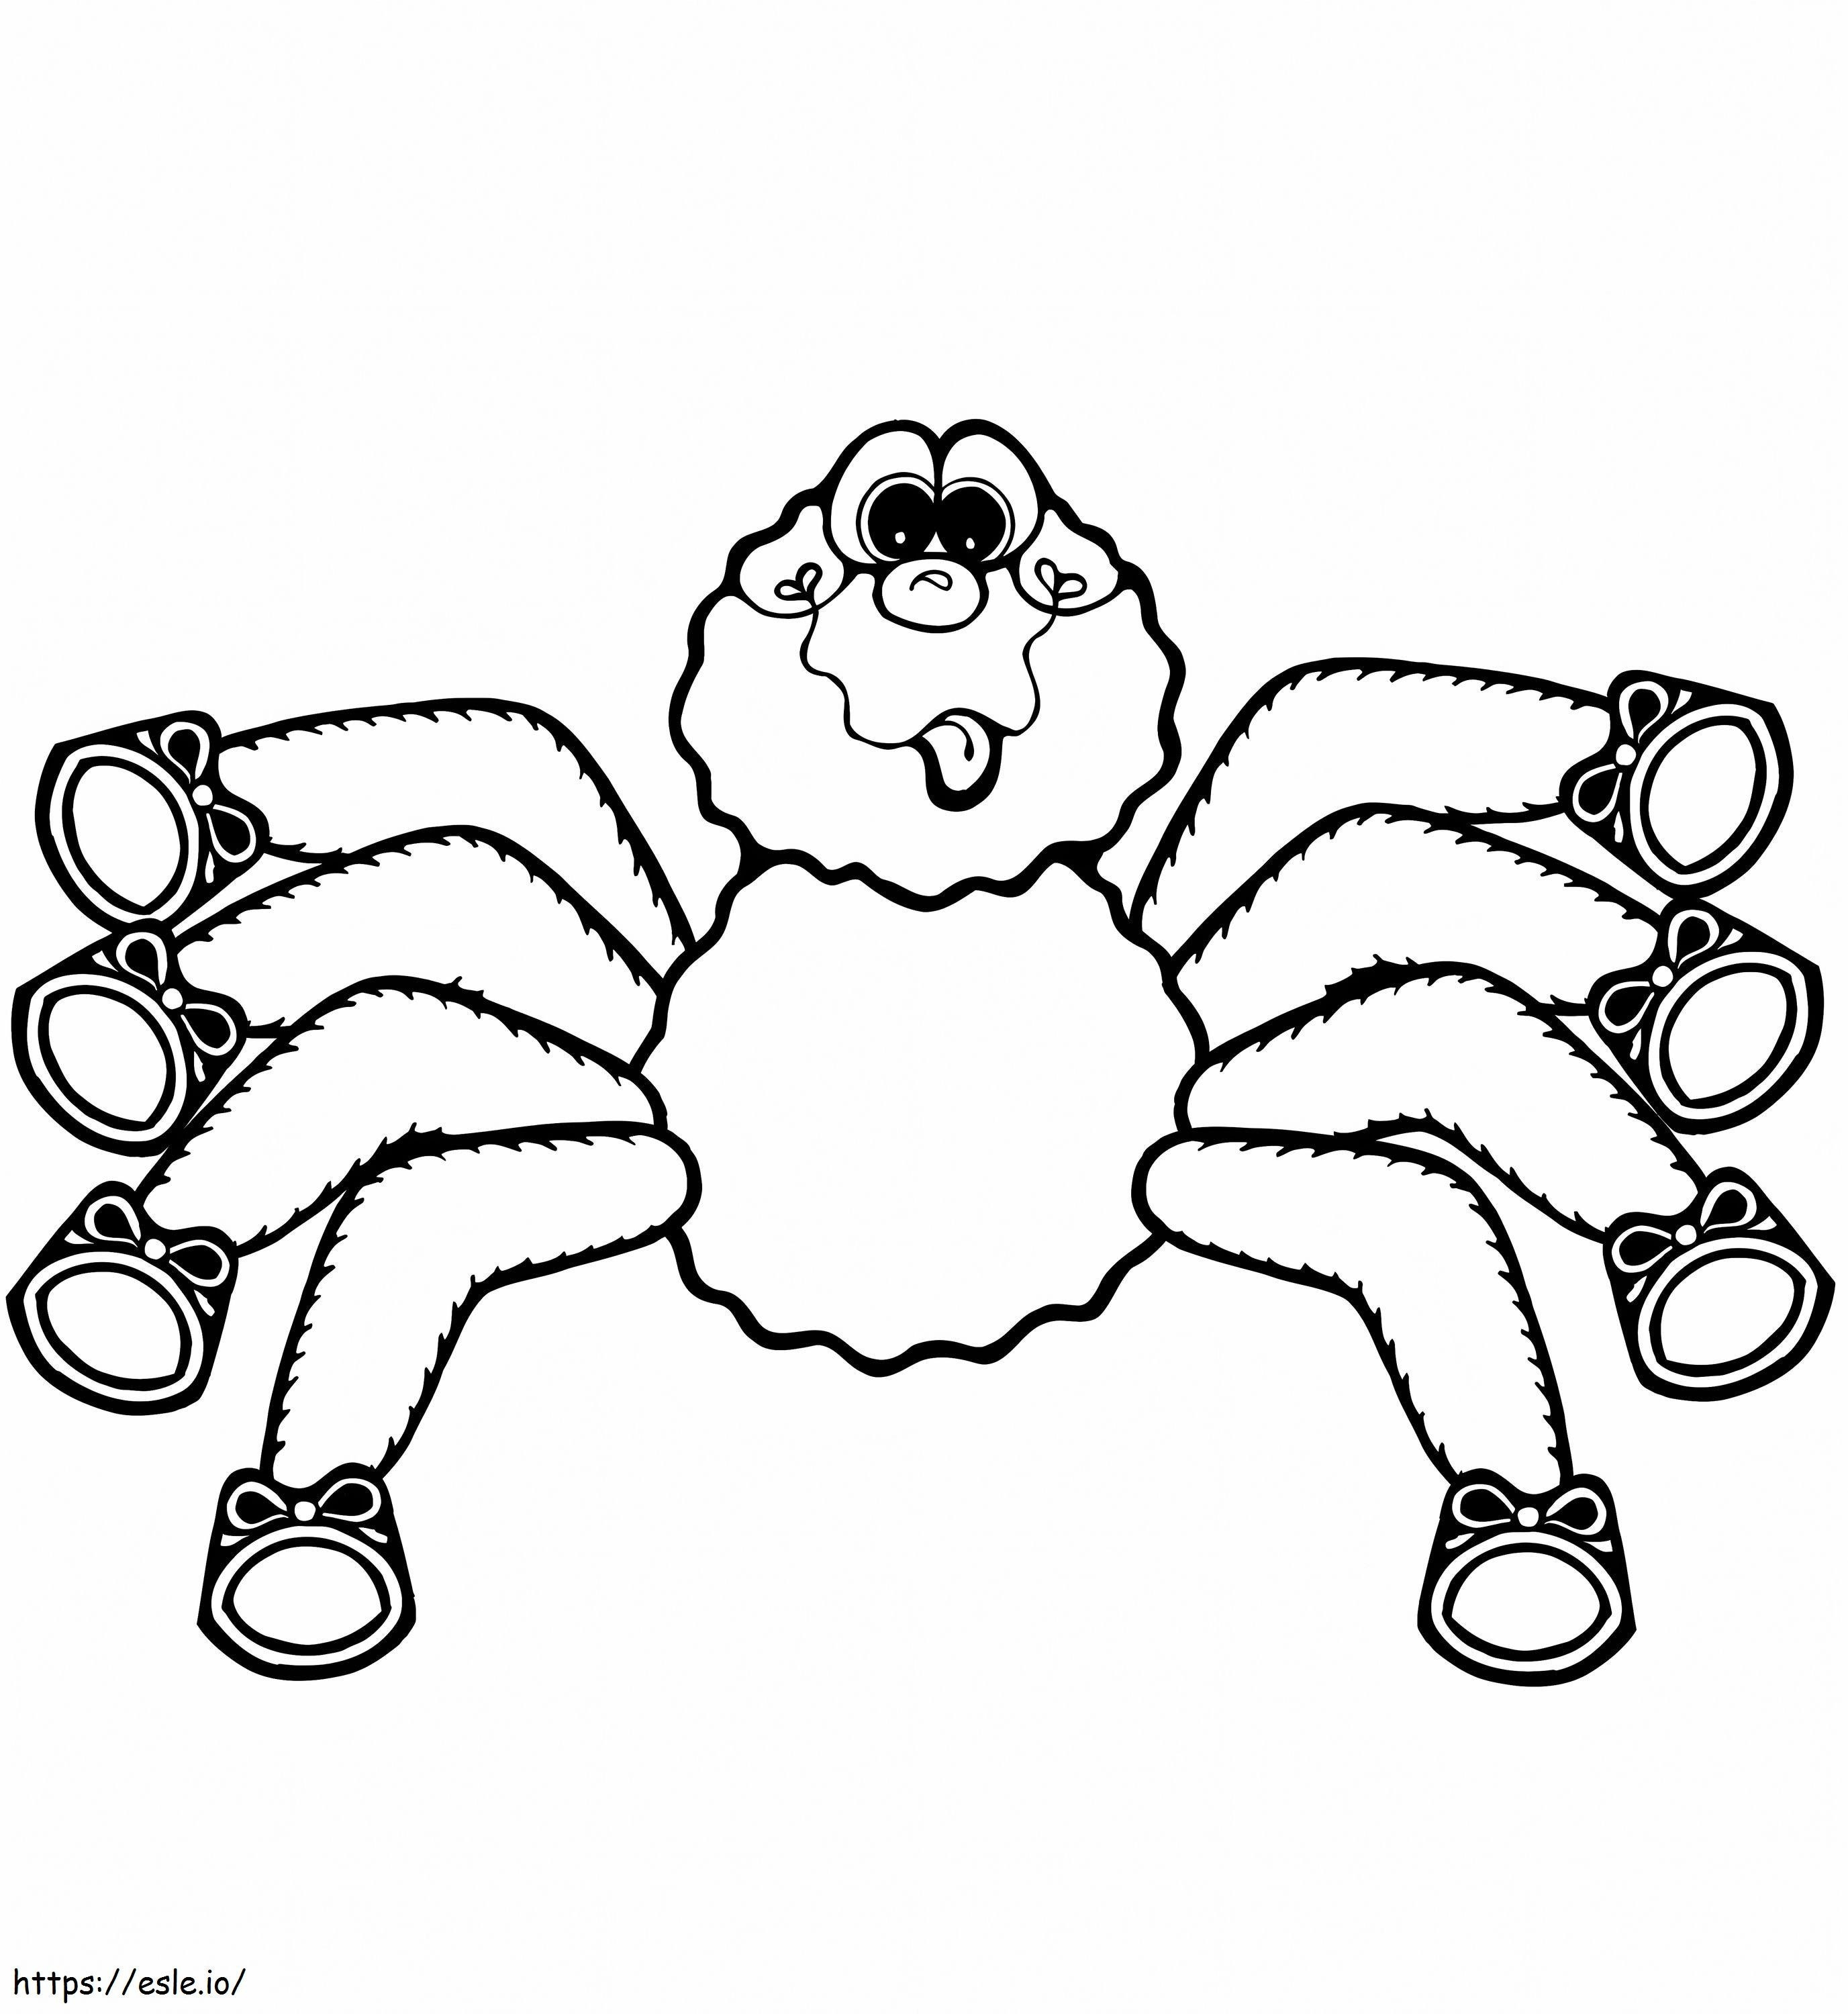 1545184994 Cartoon Spider 1 coloring page